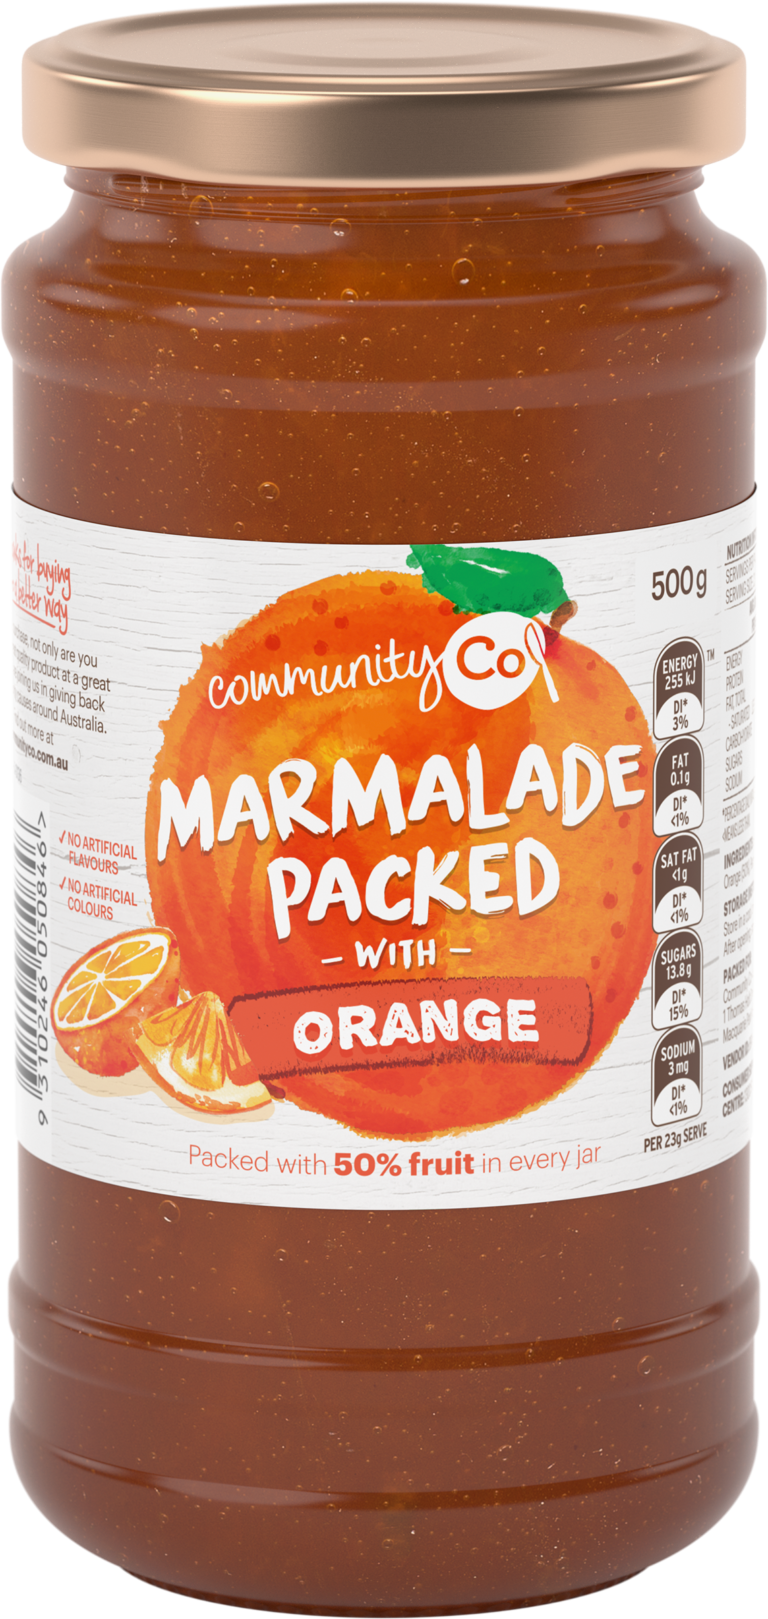 Community Co Marmalade 500g